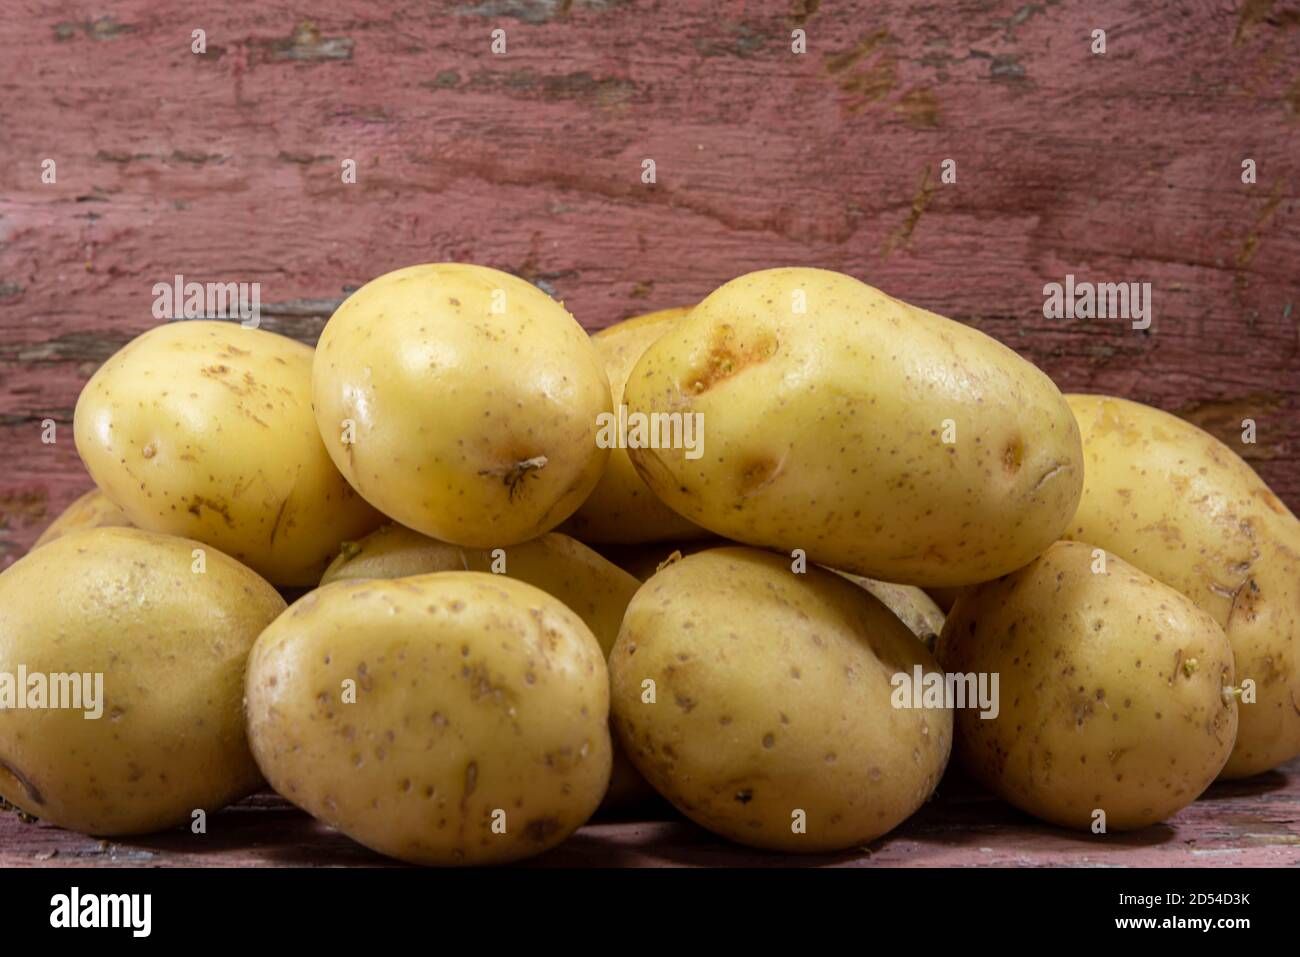 Potato, brown skin, small (Solanum tuberosum) Image